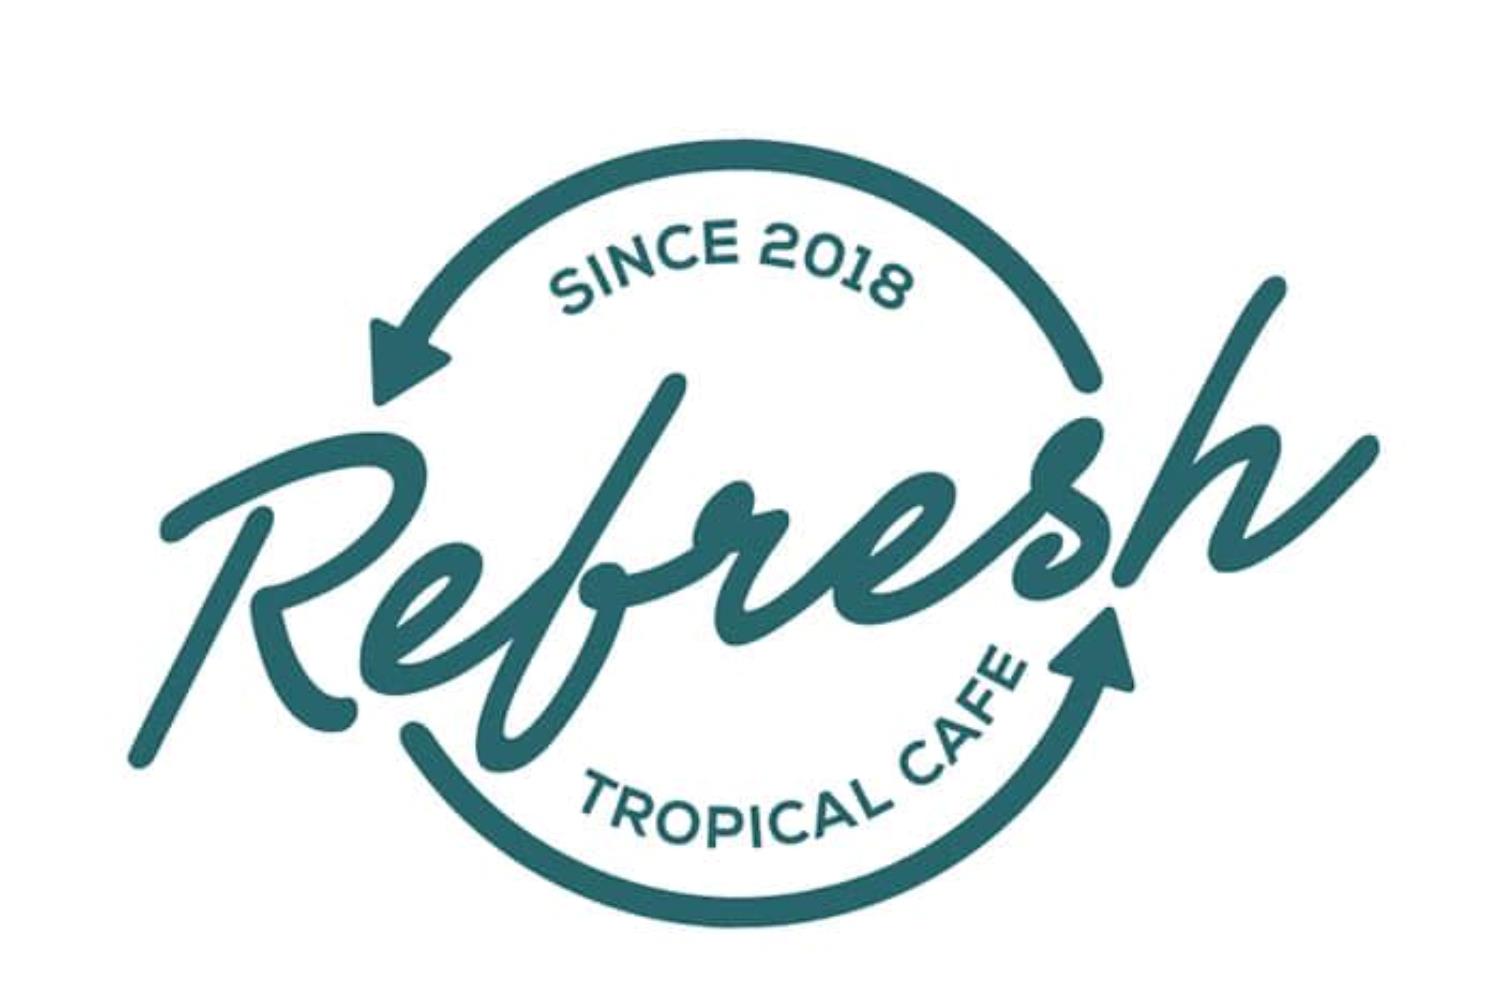 Refresh Tropical cafe 